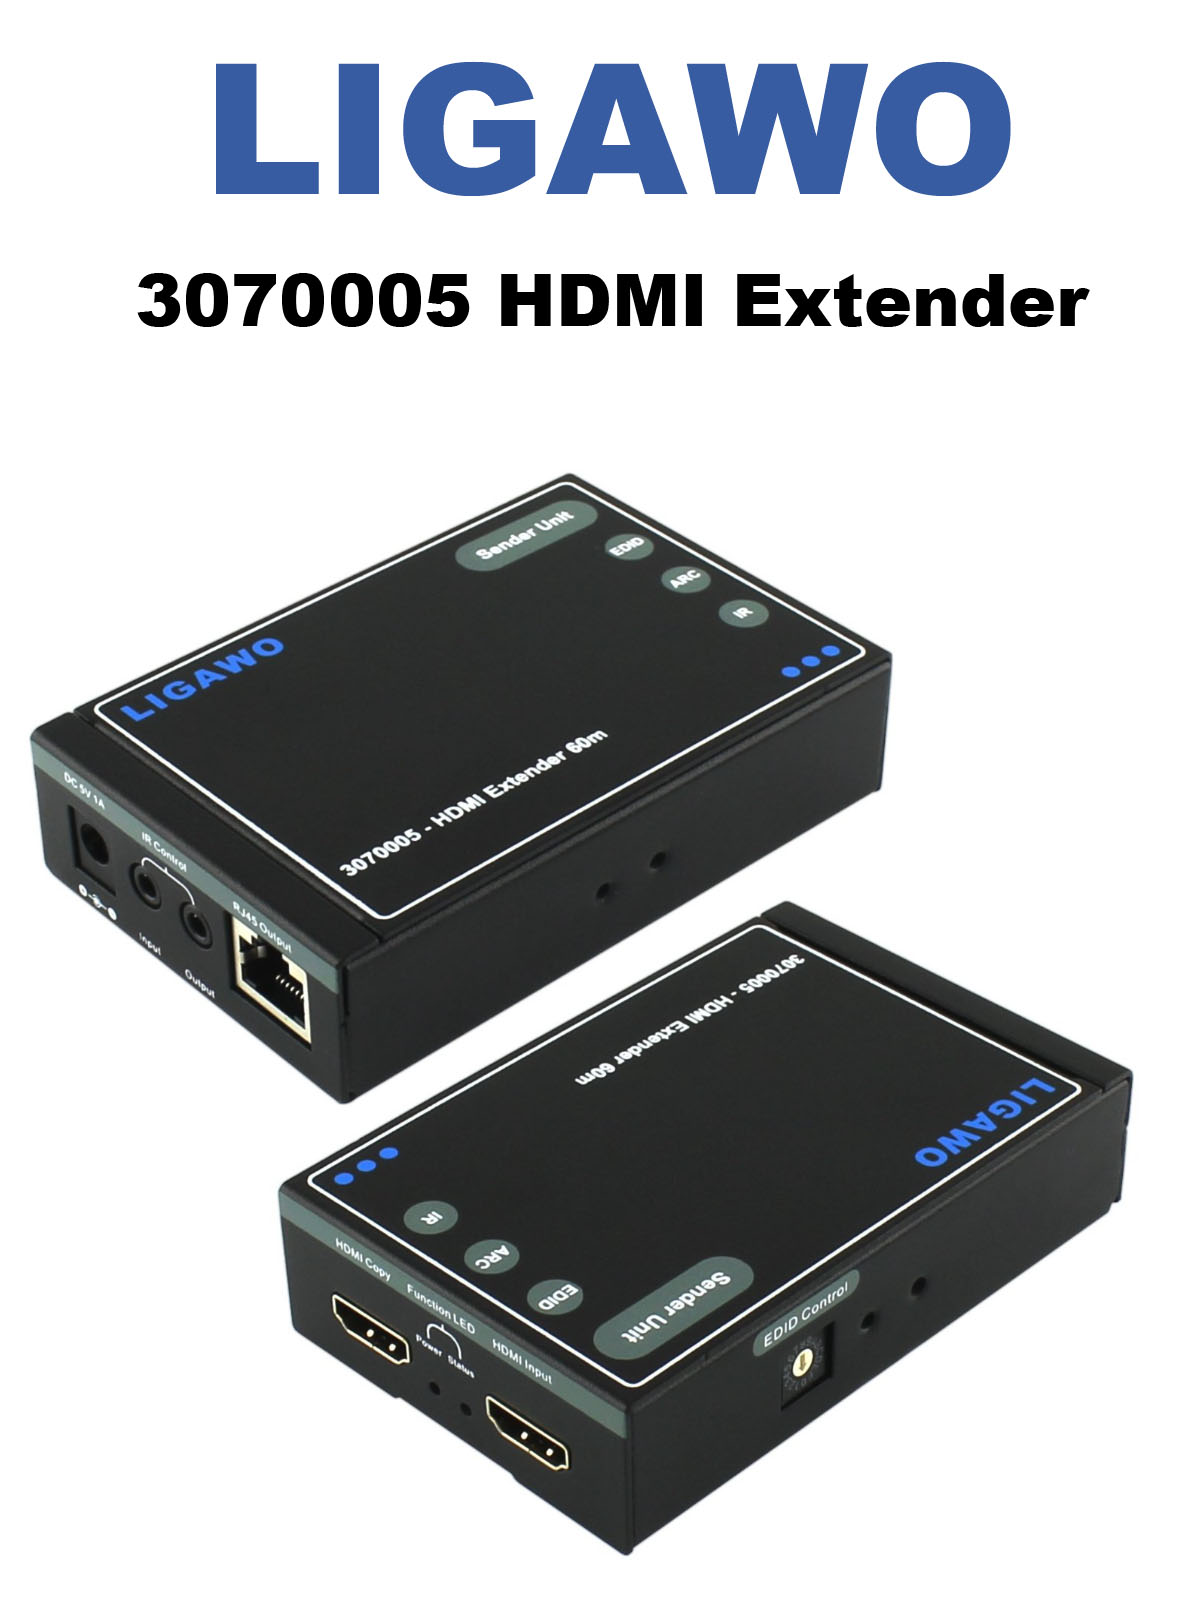 Ligawo 3070005 HDMI Extender